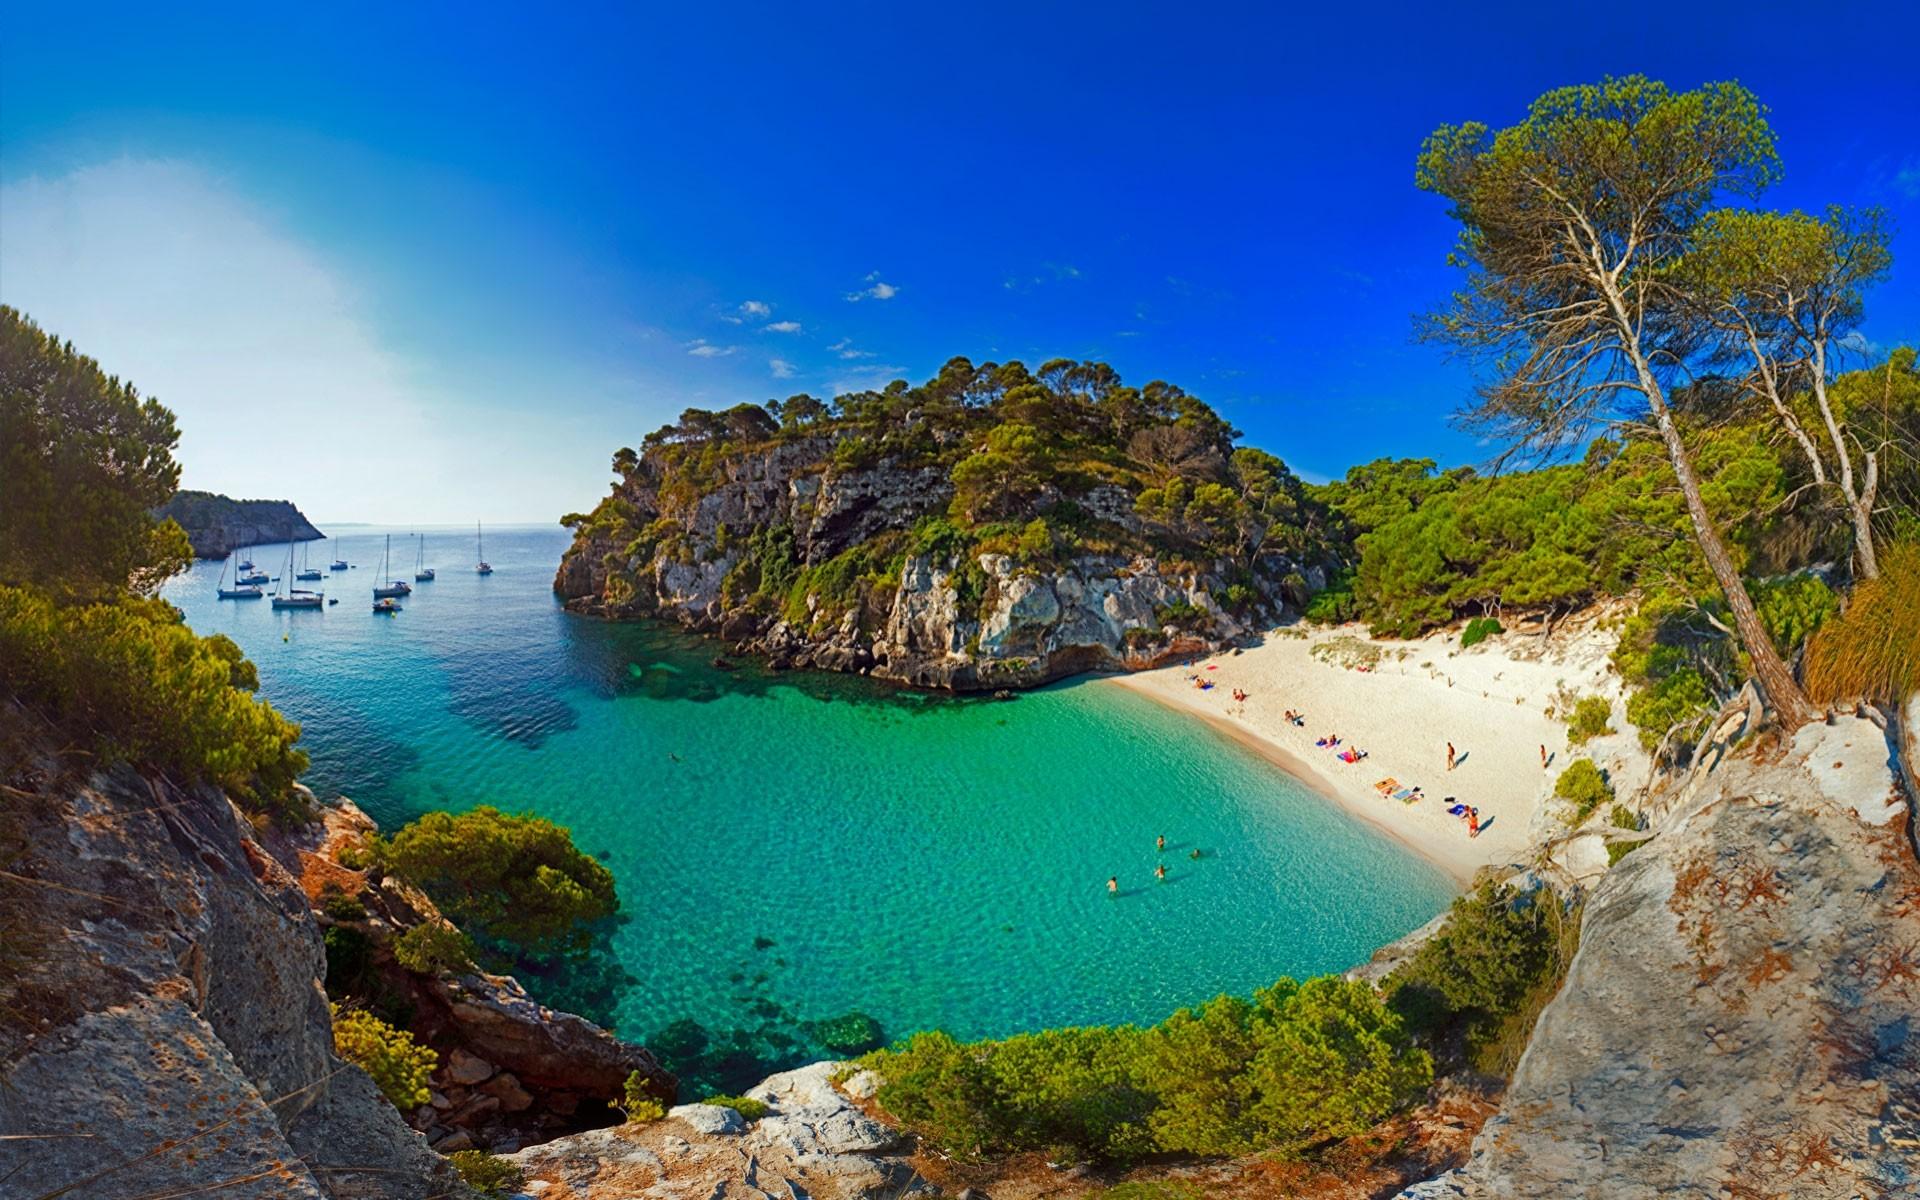 Descarga gratuita de fondo de pantalla para móvil de Playa, Árbol, Océano, Acantilado, Barco, Yate, España, Fotografía, Menorca.